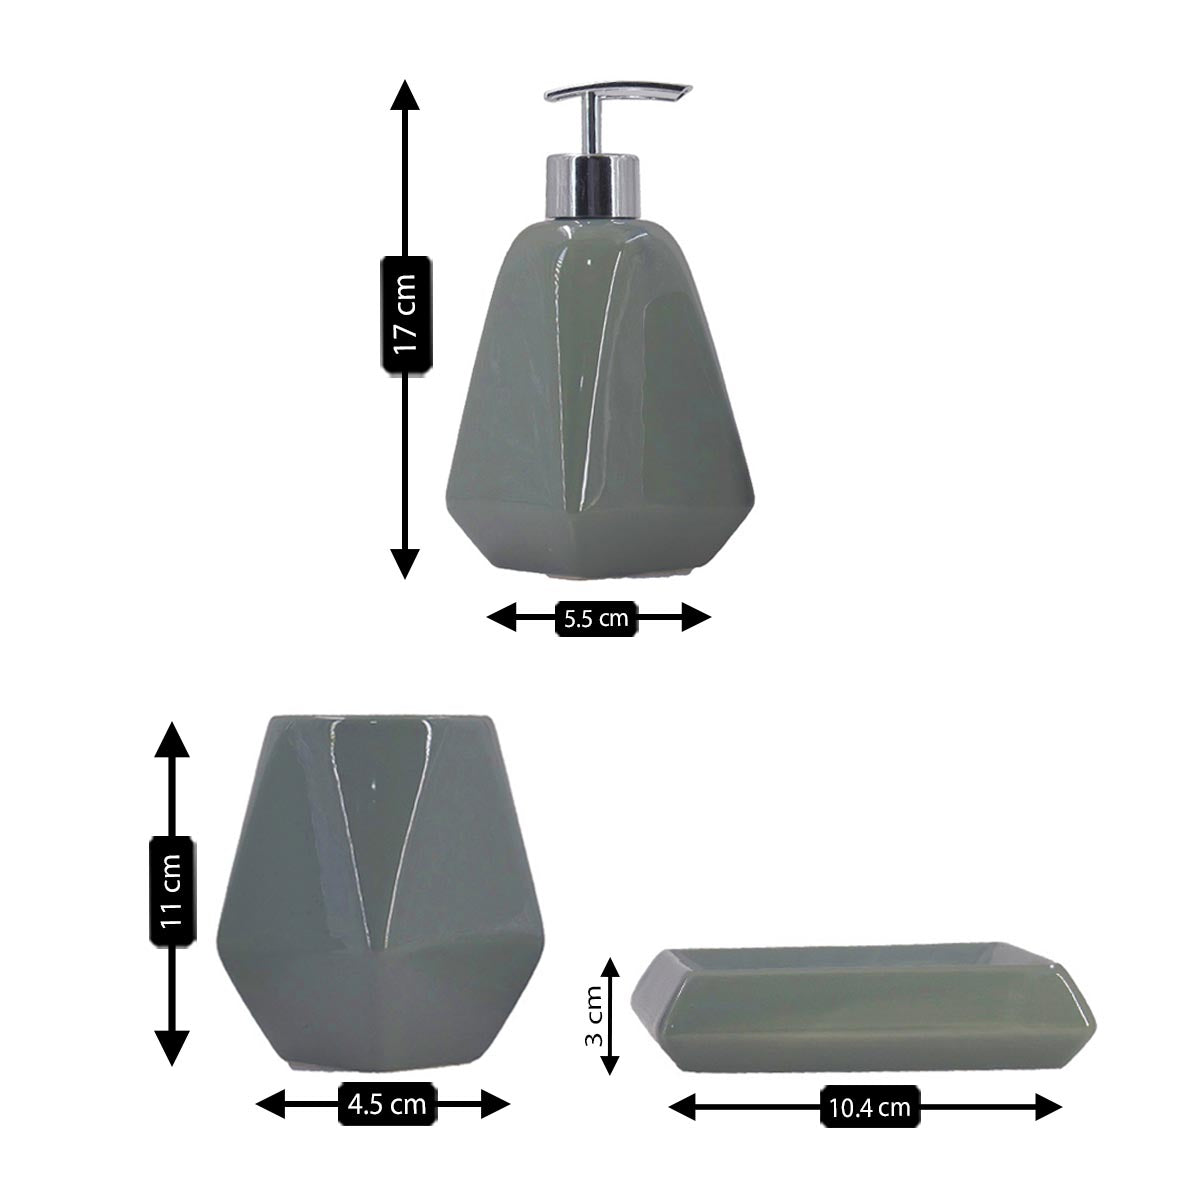 Ceramic Bathroom Accessories Set of 3 Bath Set with Soap Dispenser (8127)